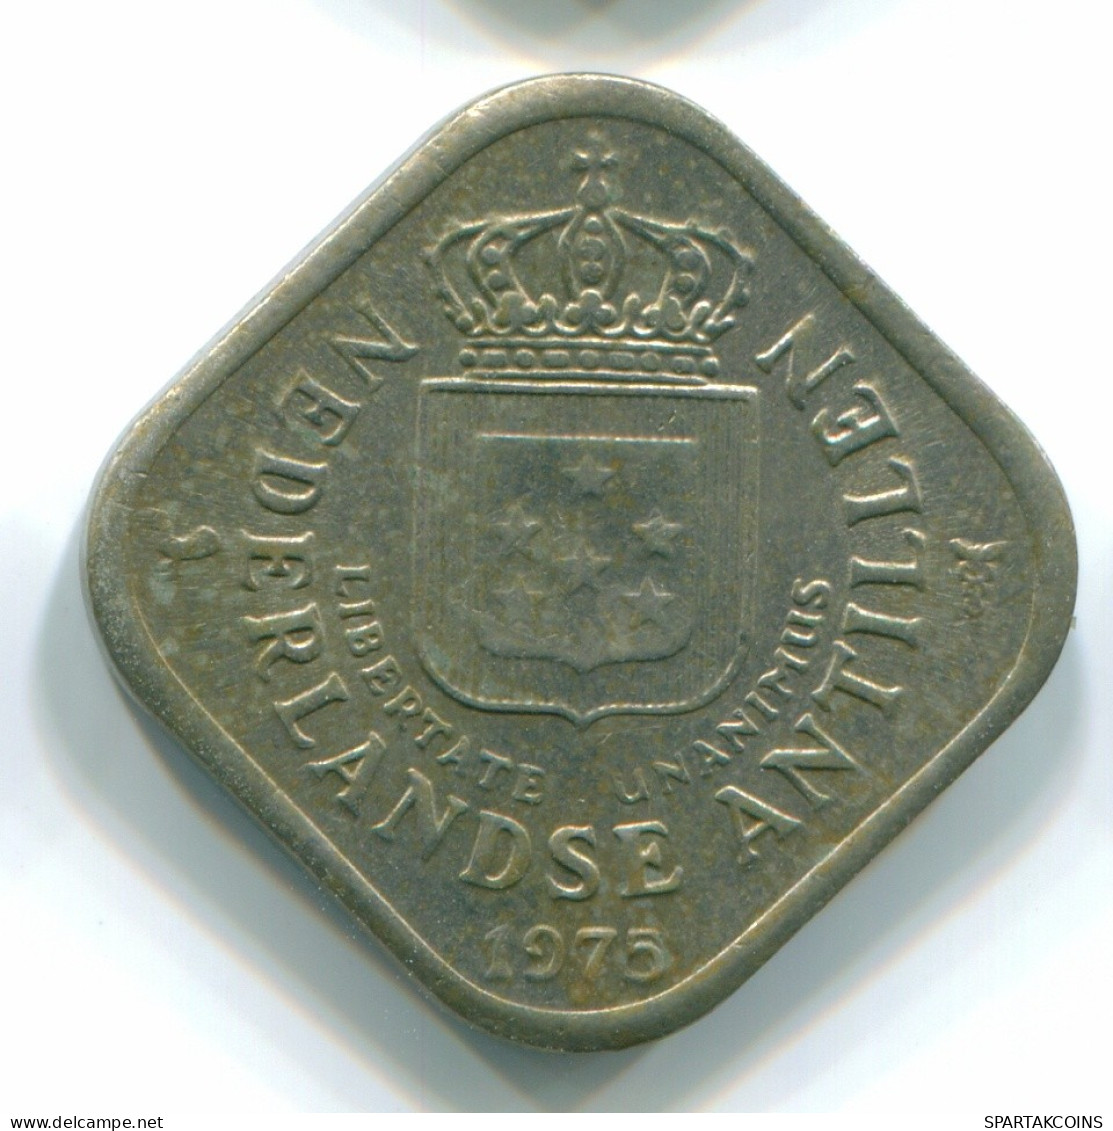 5 CENTS 1975 NETHERLANDS ANTILLES Nickel Colonial Coin #S12236.U.A - Antilles Néerlandaises